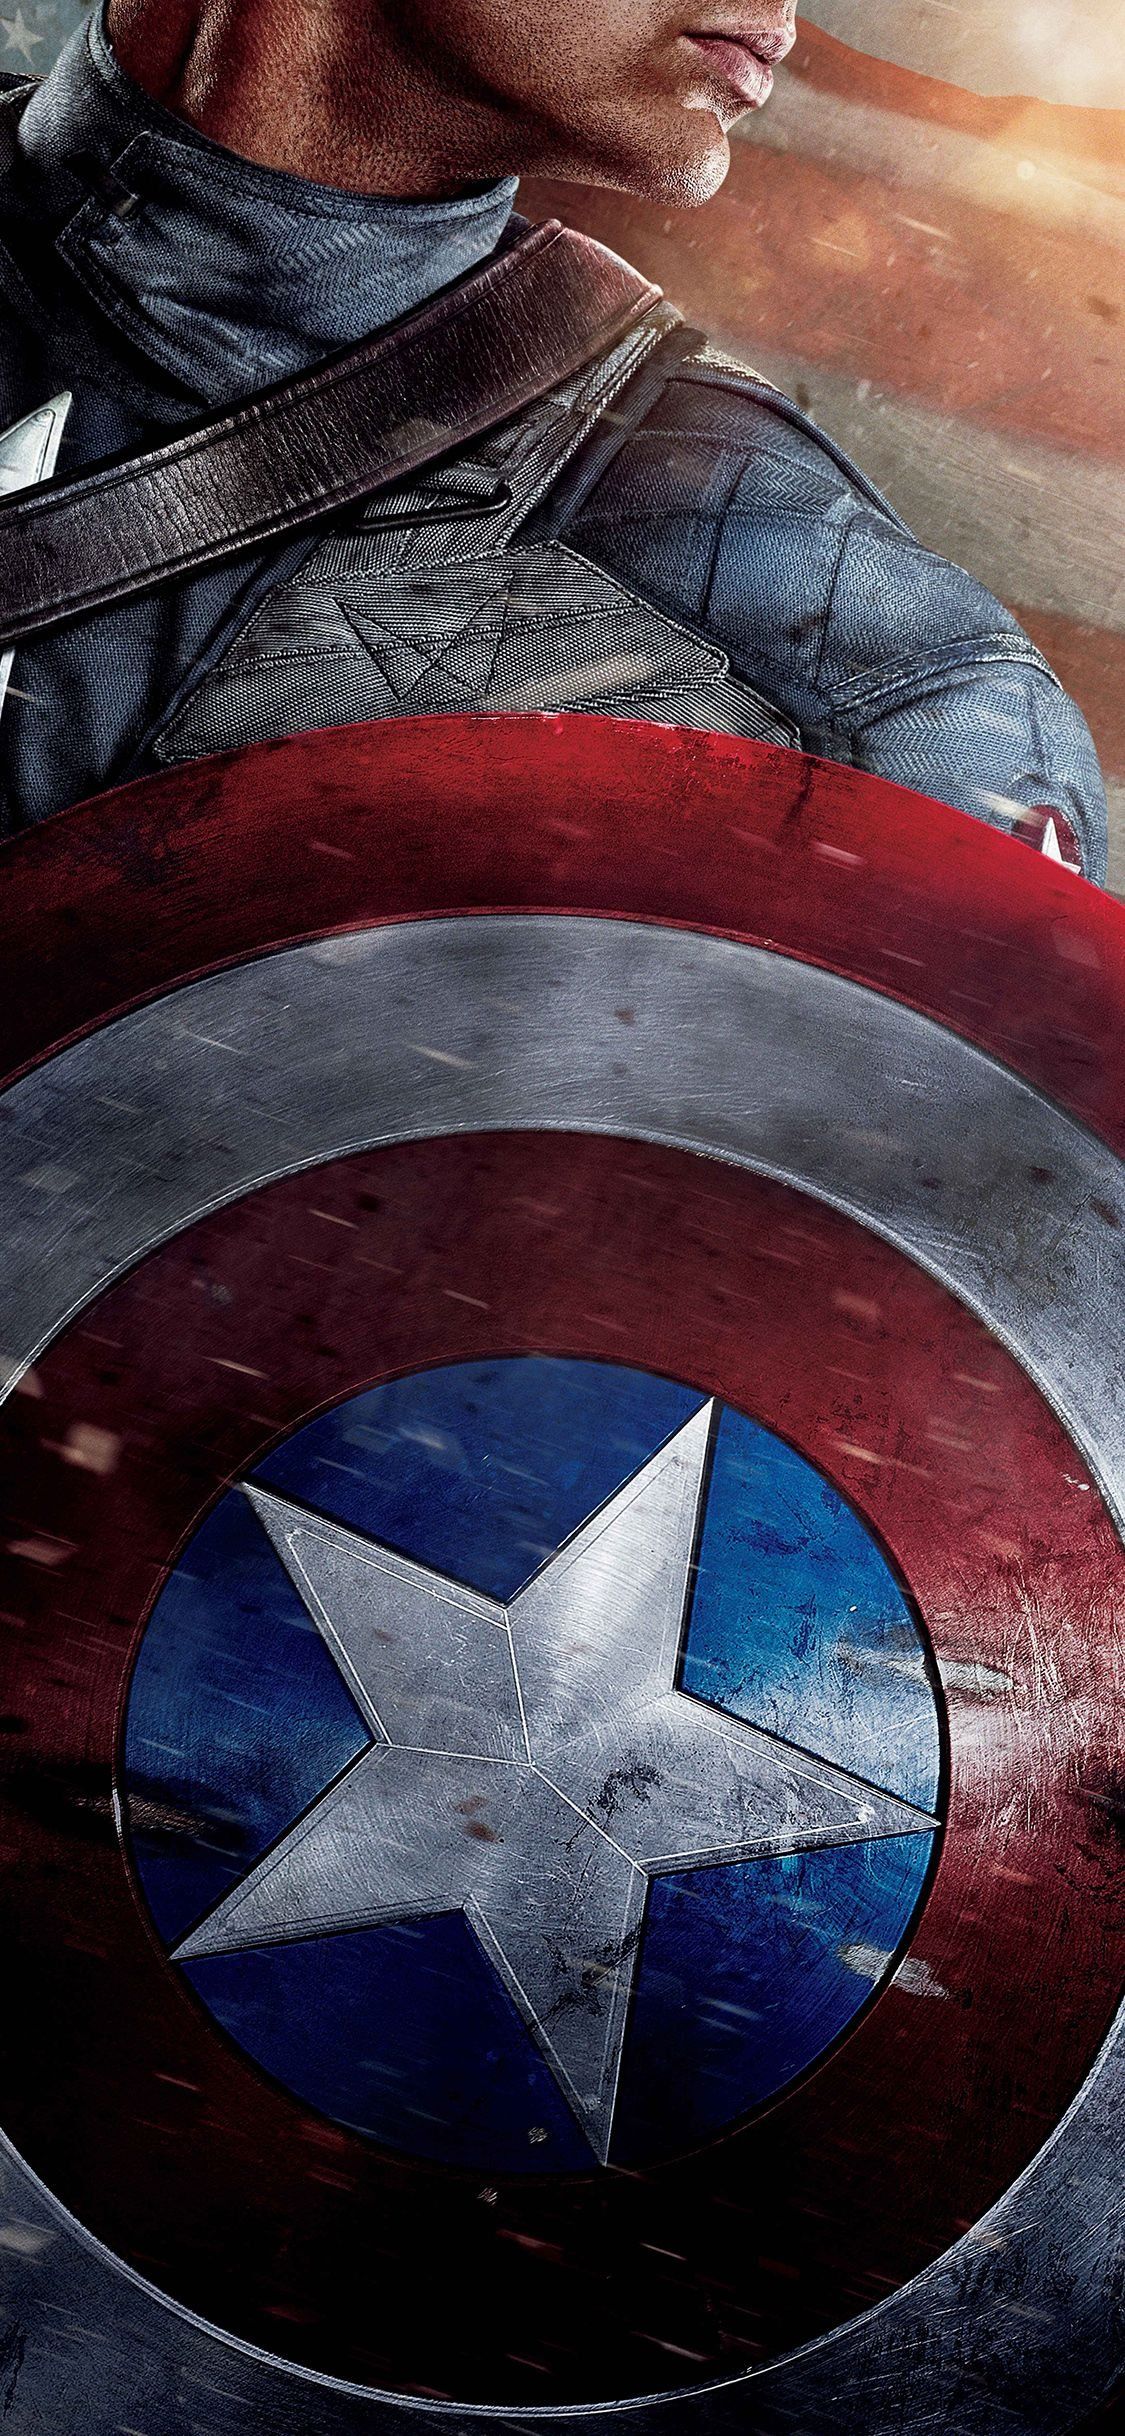 Captain America Shield 4k iPhone Wallpapers - Wallpaper Cave